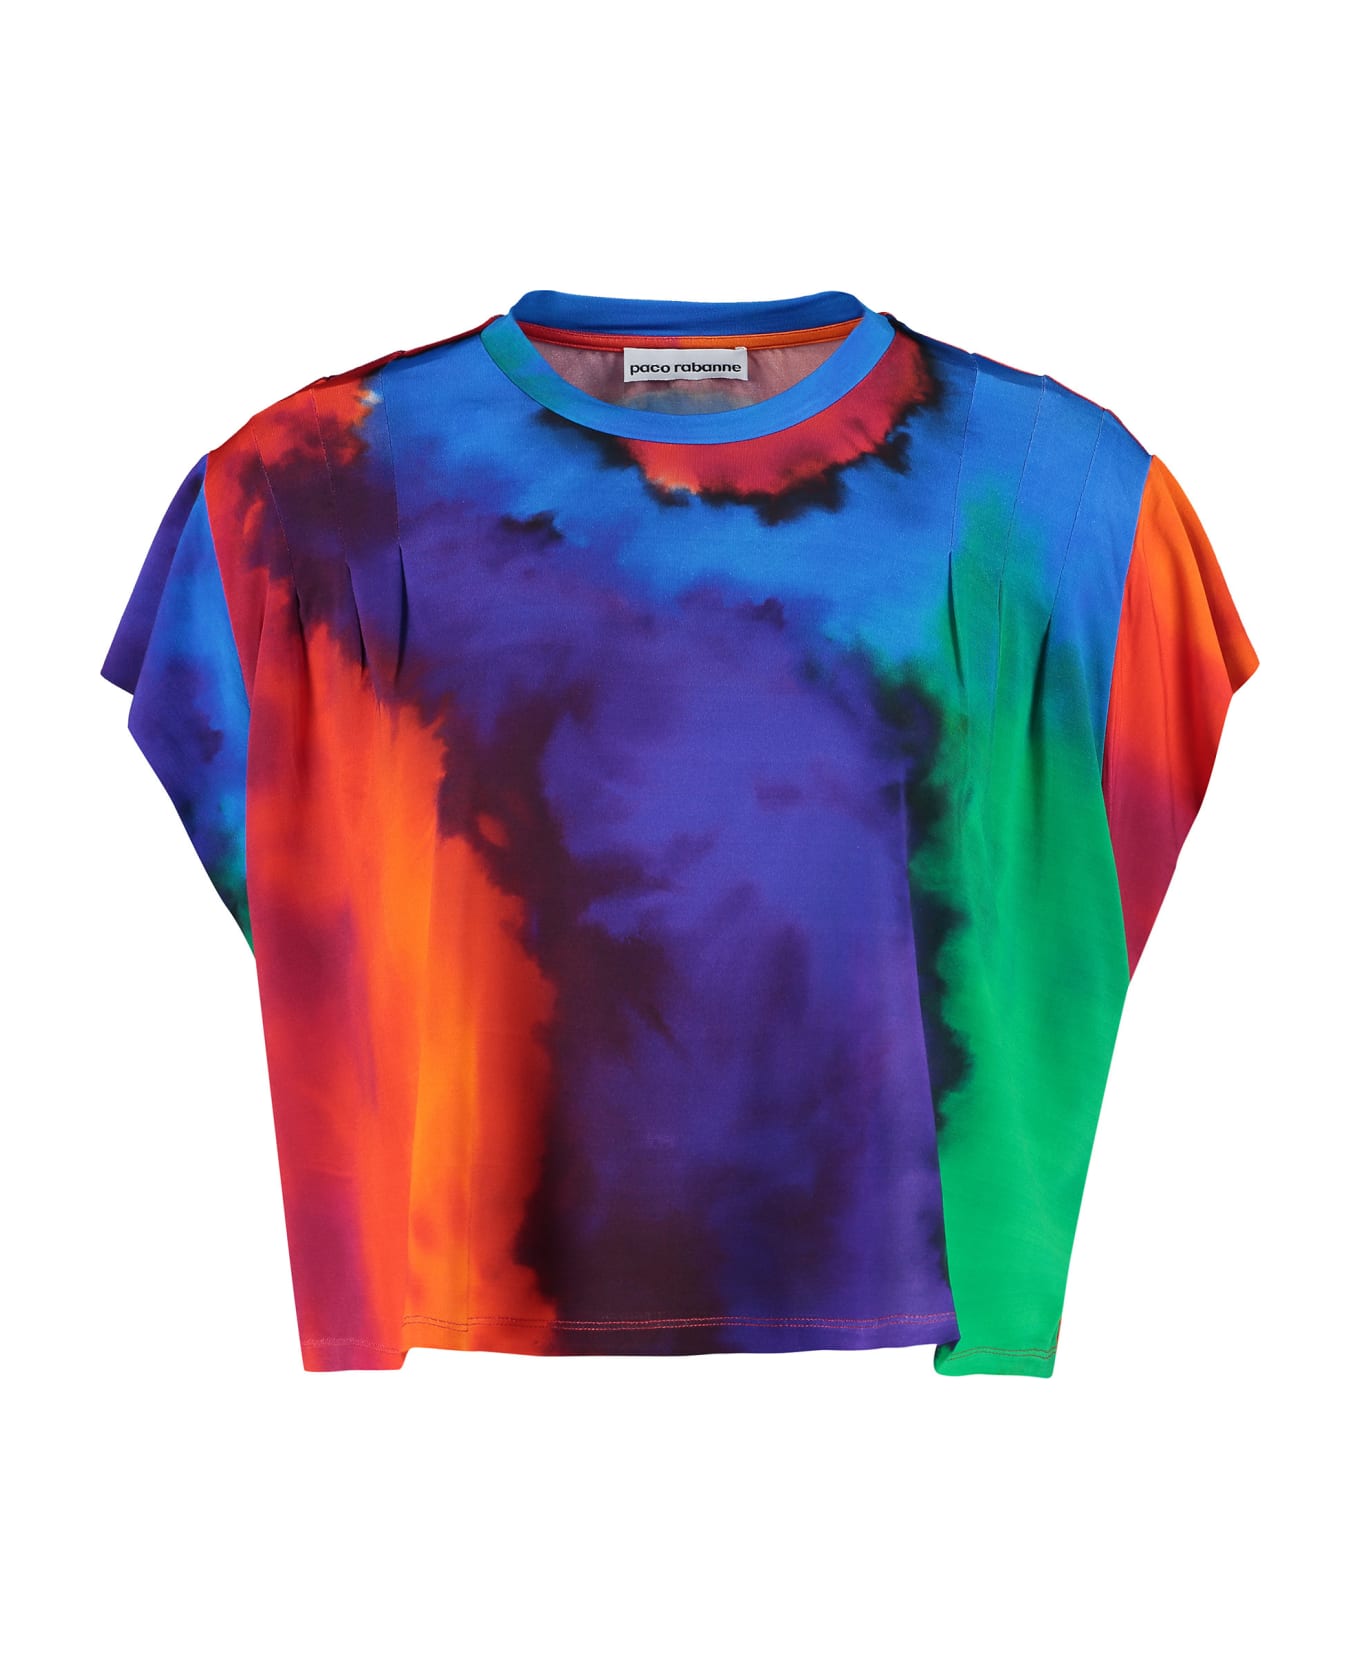 Paco Rabanne Printed T-shirt - Multicolor Tシャツ